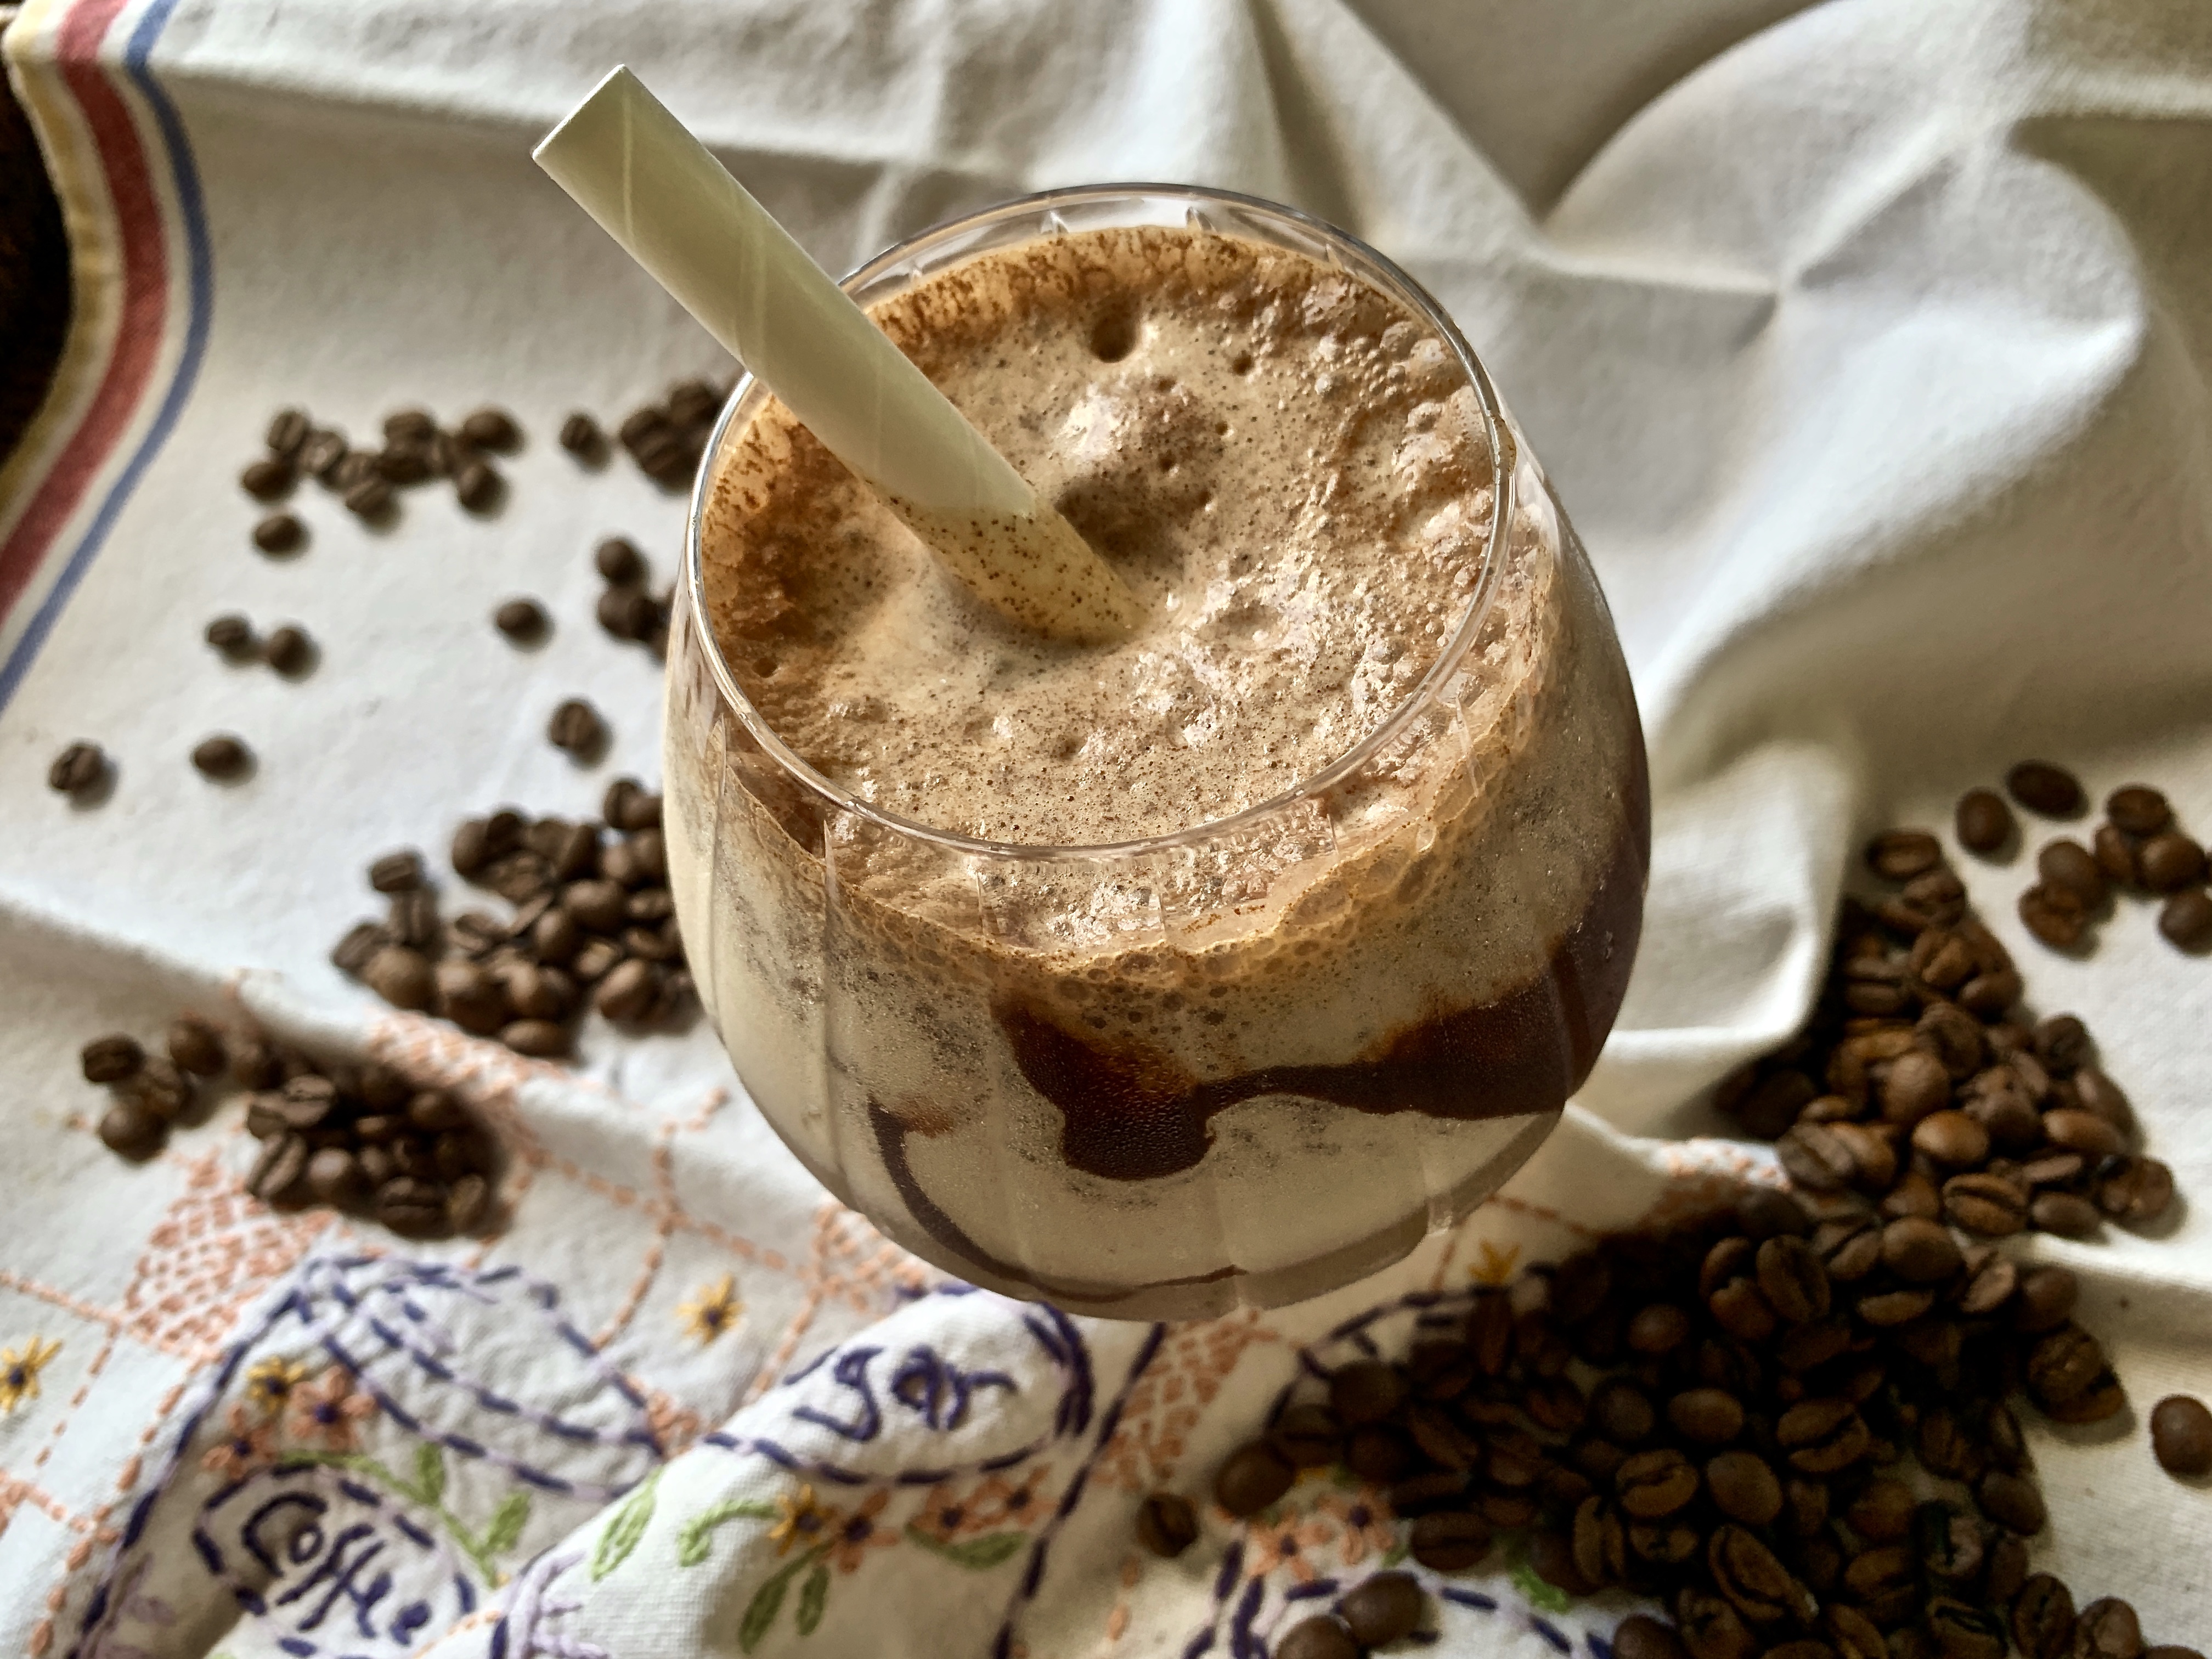 Espresso & Coffee Recipes - Frappe, Iced, & Hot